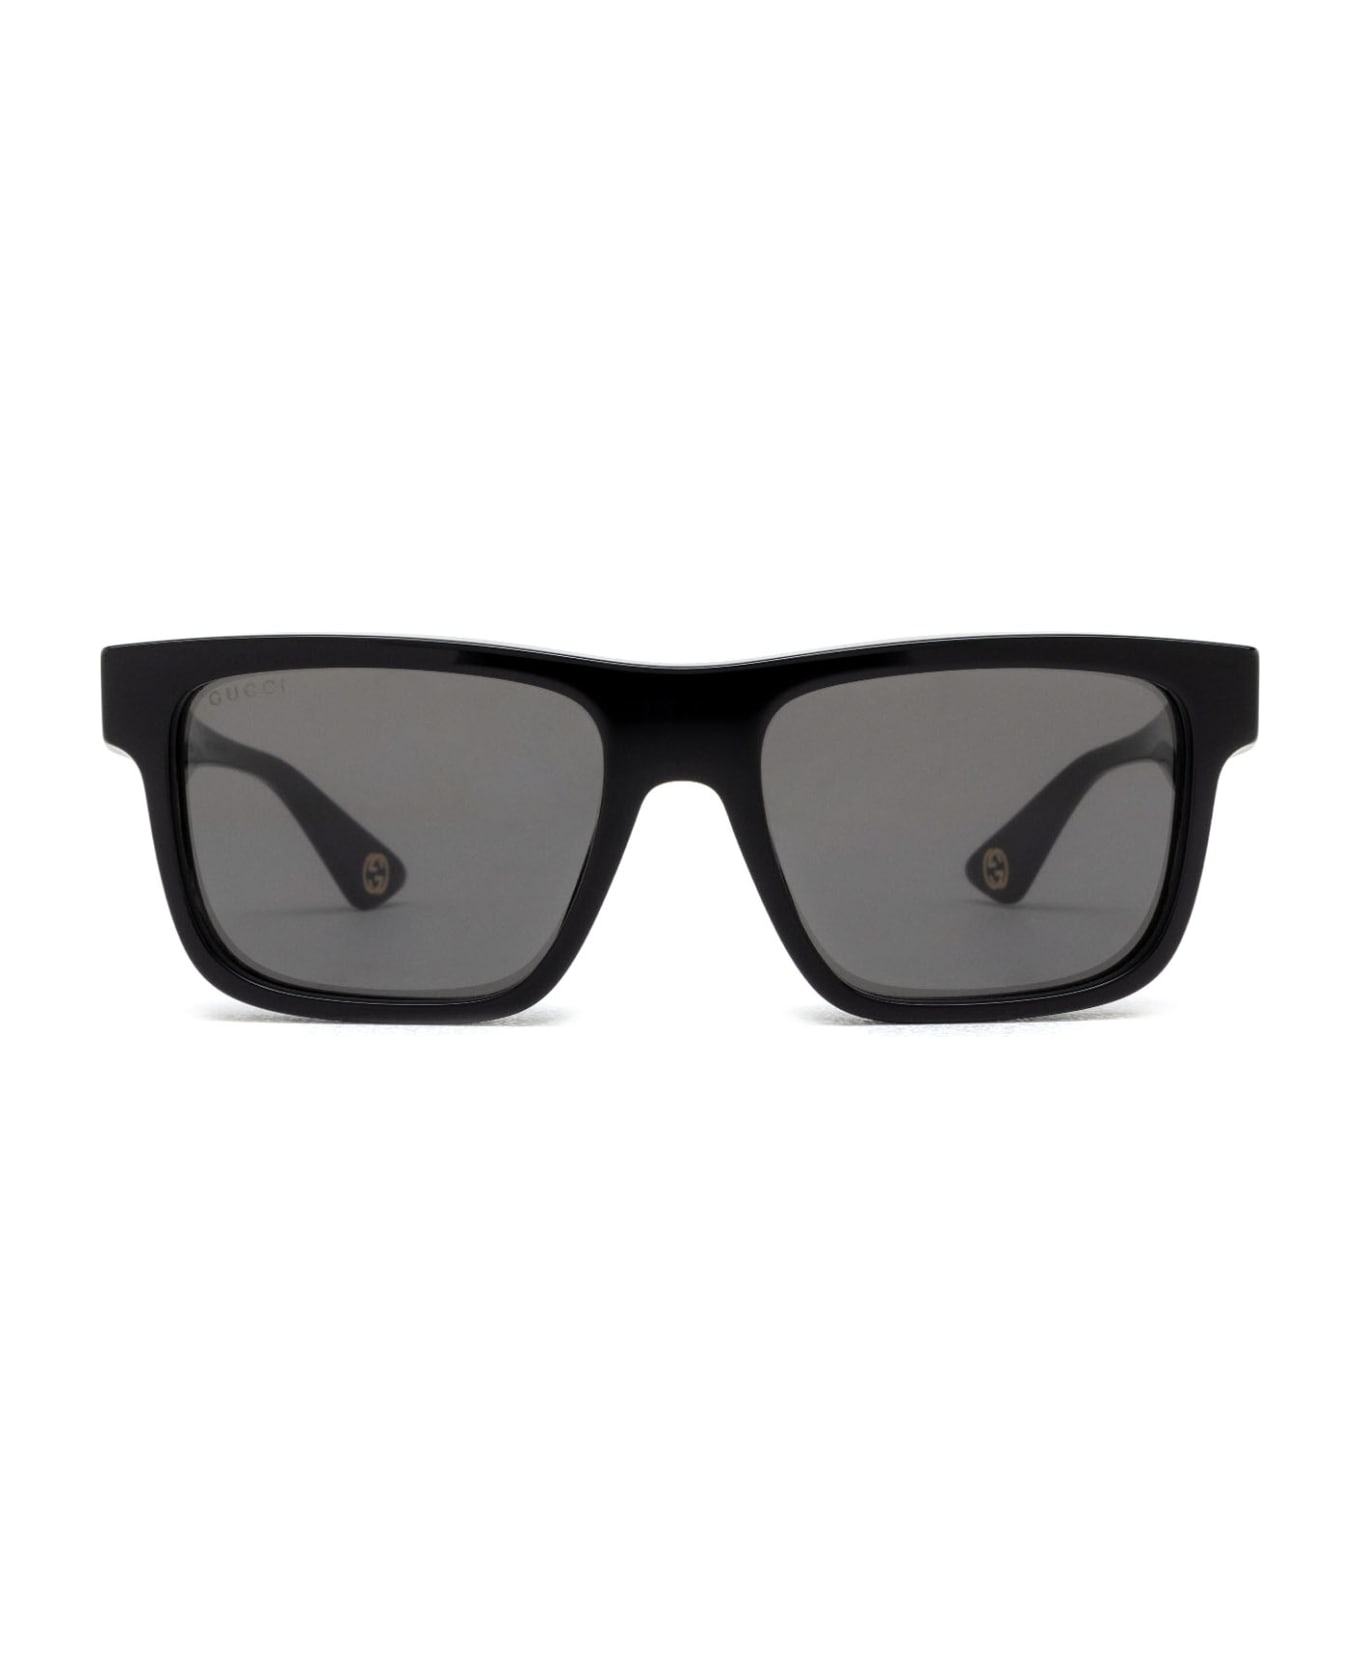 Gucci Eyewear Gg1618s Black Sunglasses - Black